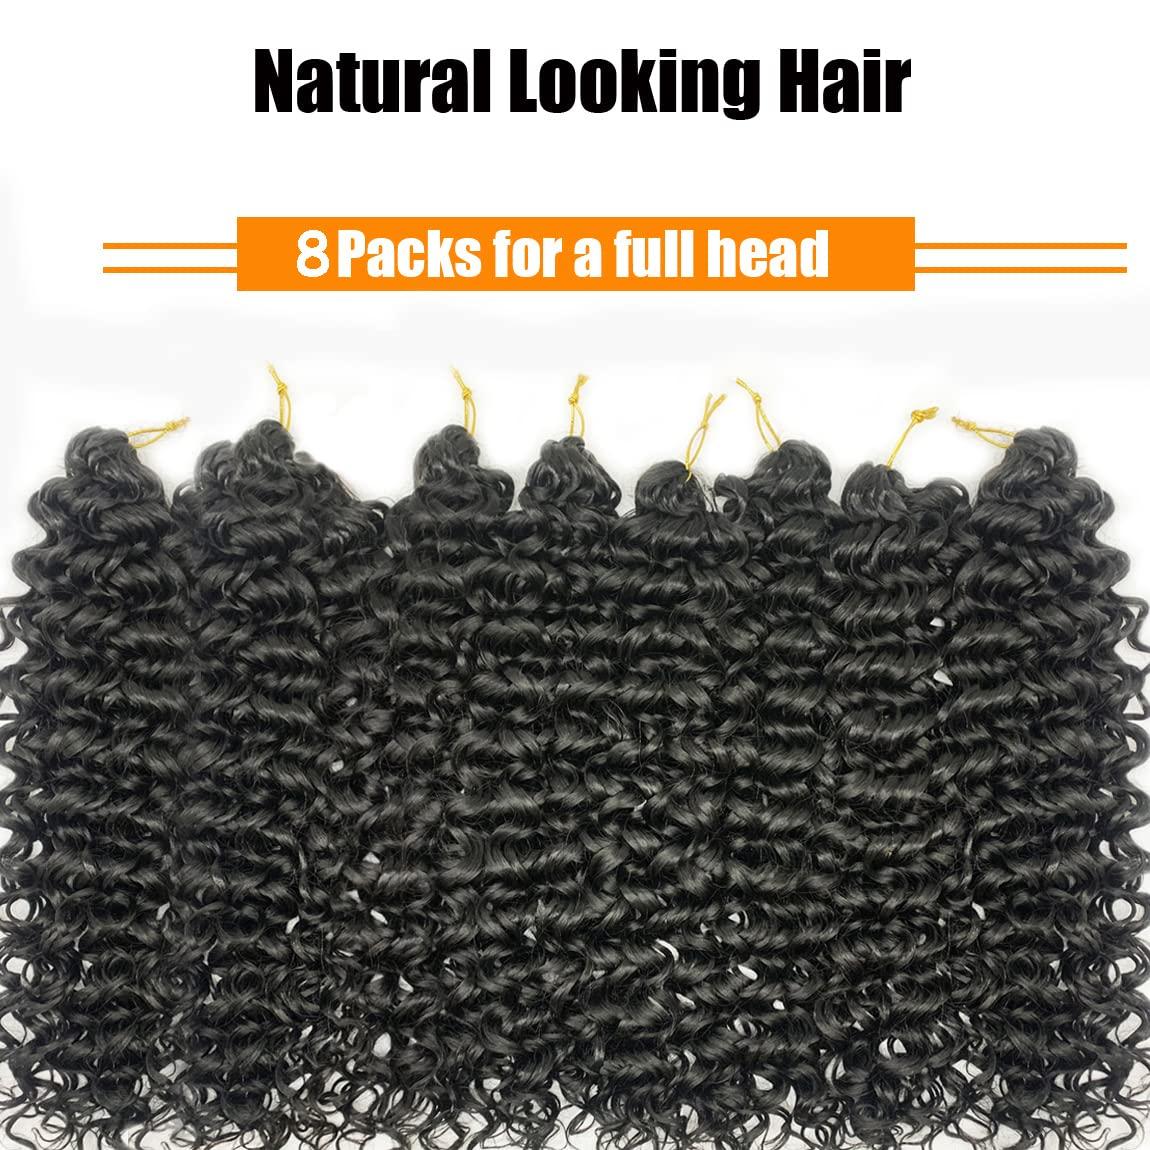 Crochet Hair 12 Inch 8 Packs Gogo Curl Curly Crochet Hair Beach Curl  Crochet Hair Extensions Ocean Wave Crochet Hair For Black Women(12 inch 8  packs 1B) 12 Inch (Pack of 8) 1B